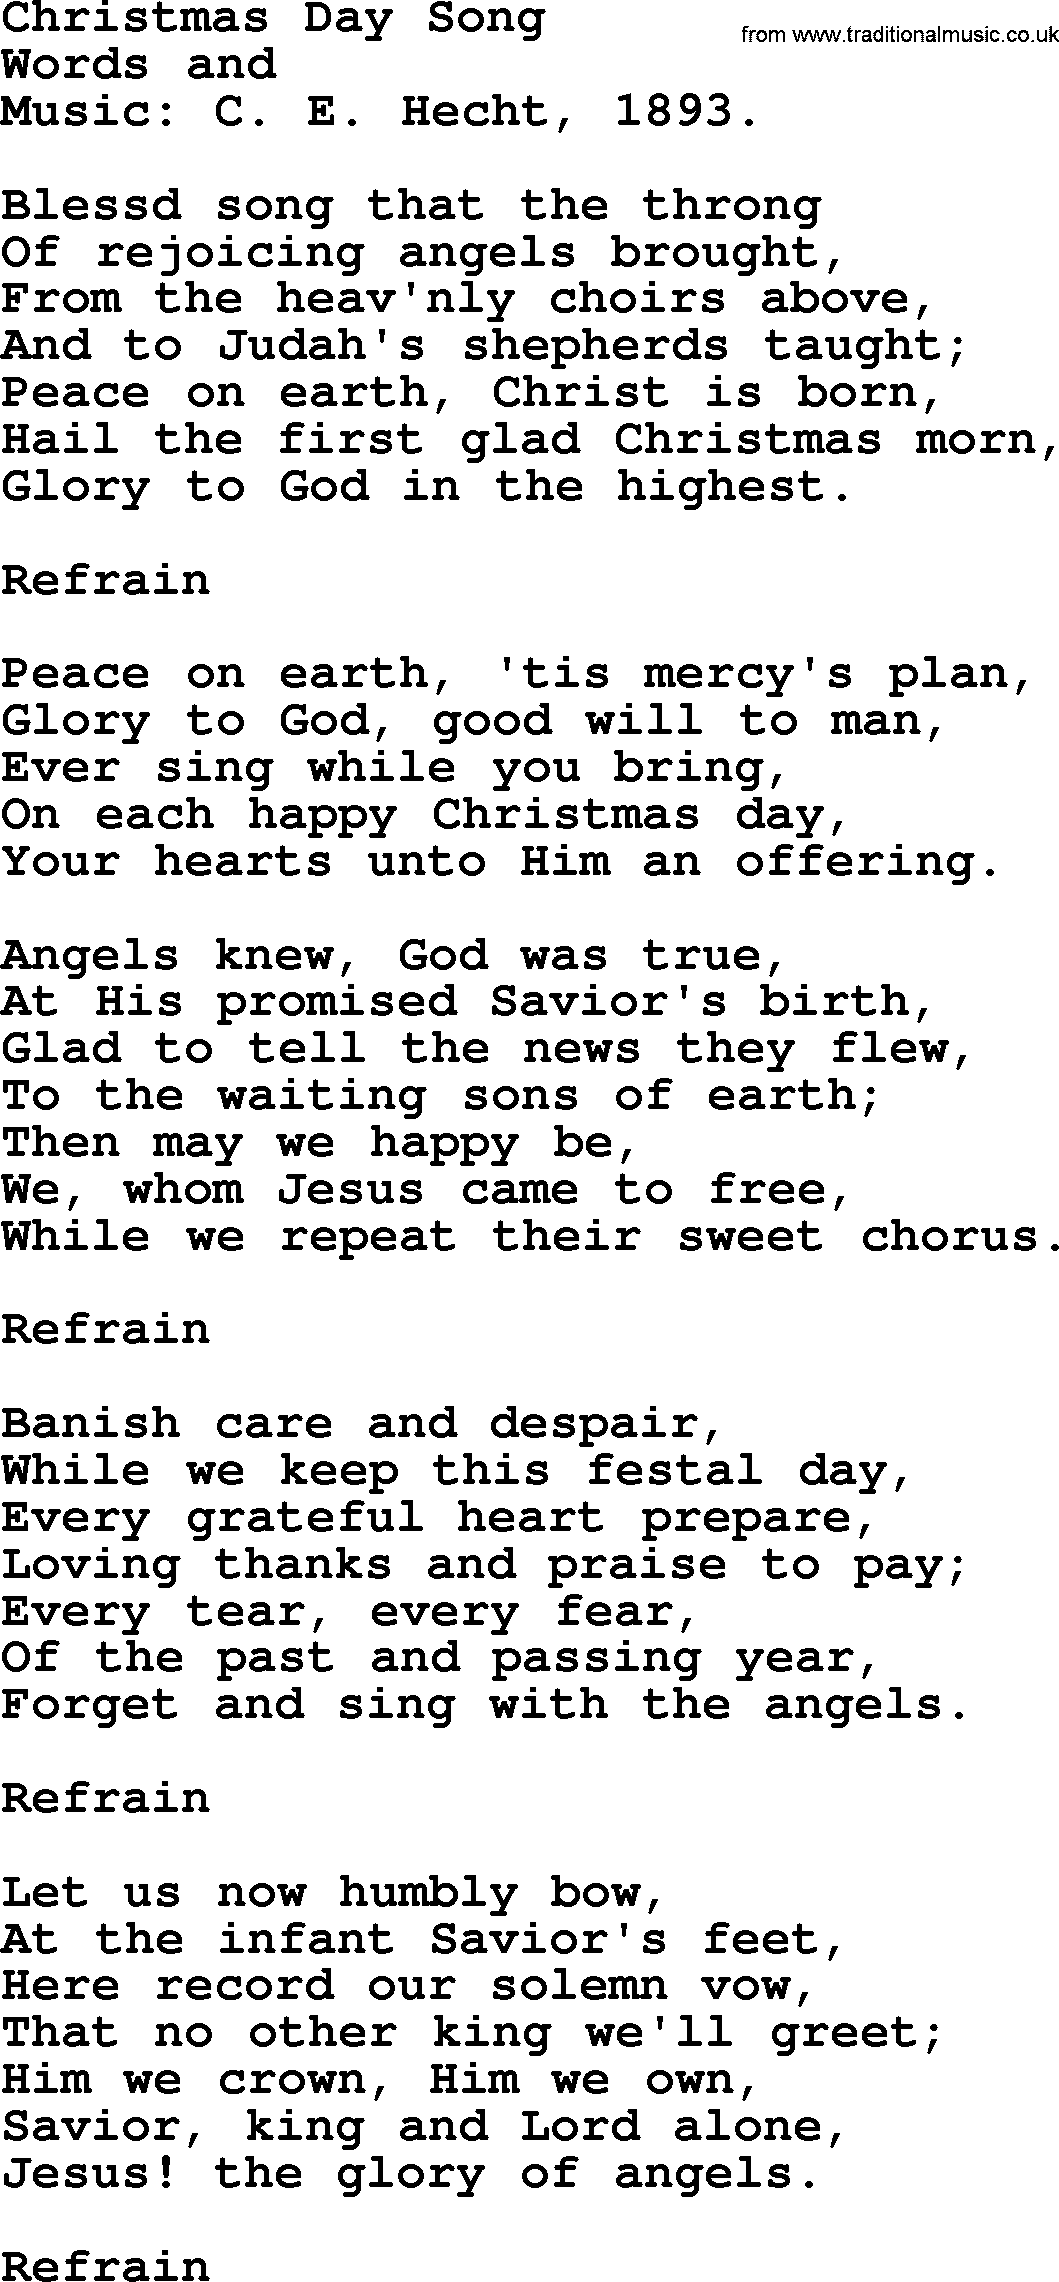 Christmas Hymns, Carols and Songs, title: Christmas Day Song, lyrics with PDF